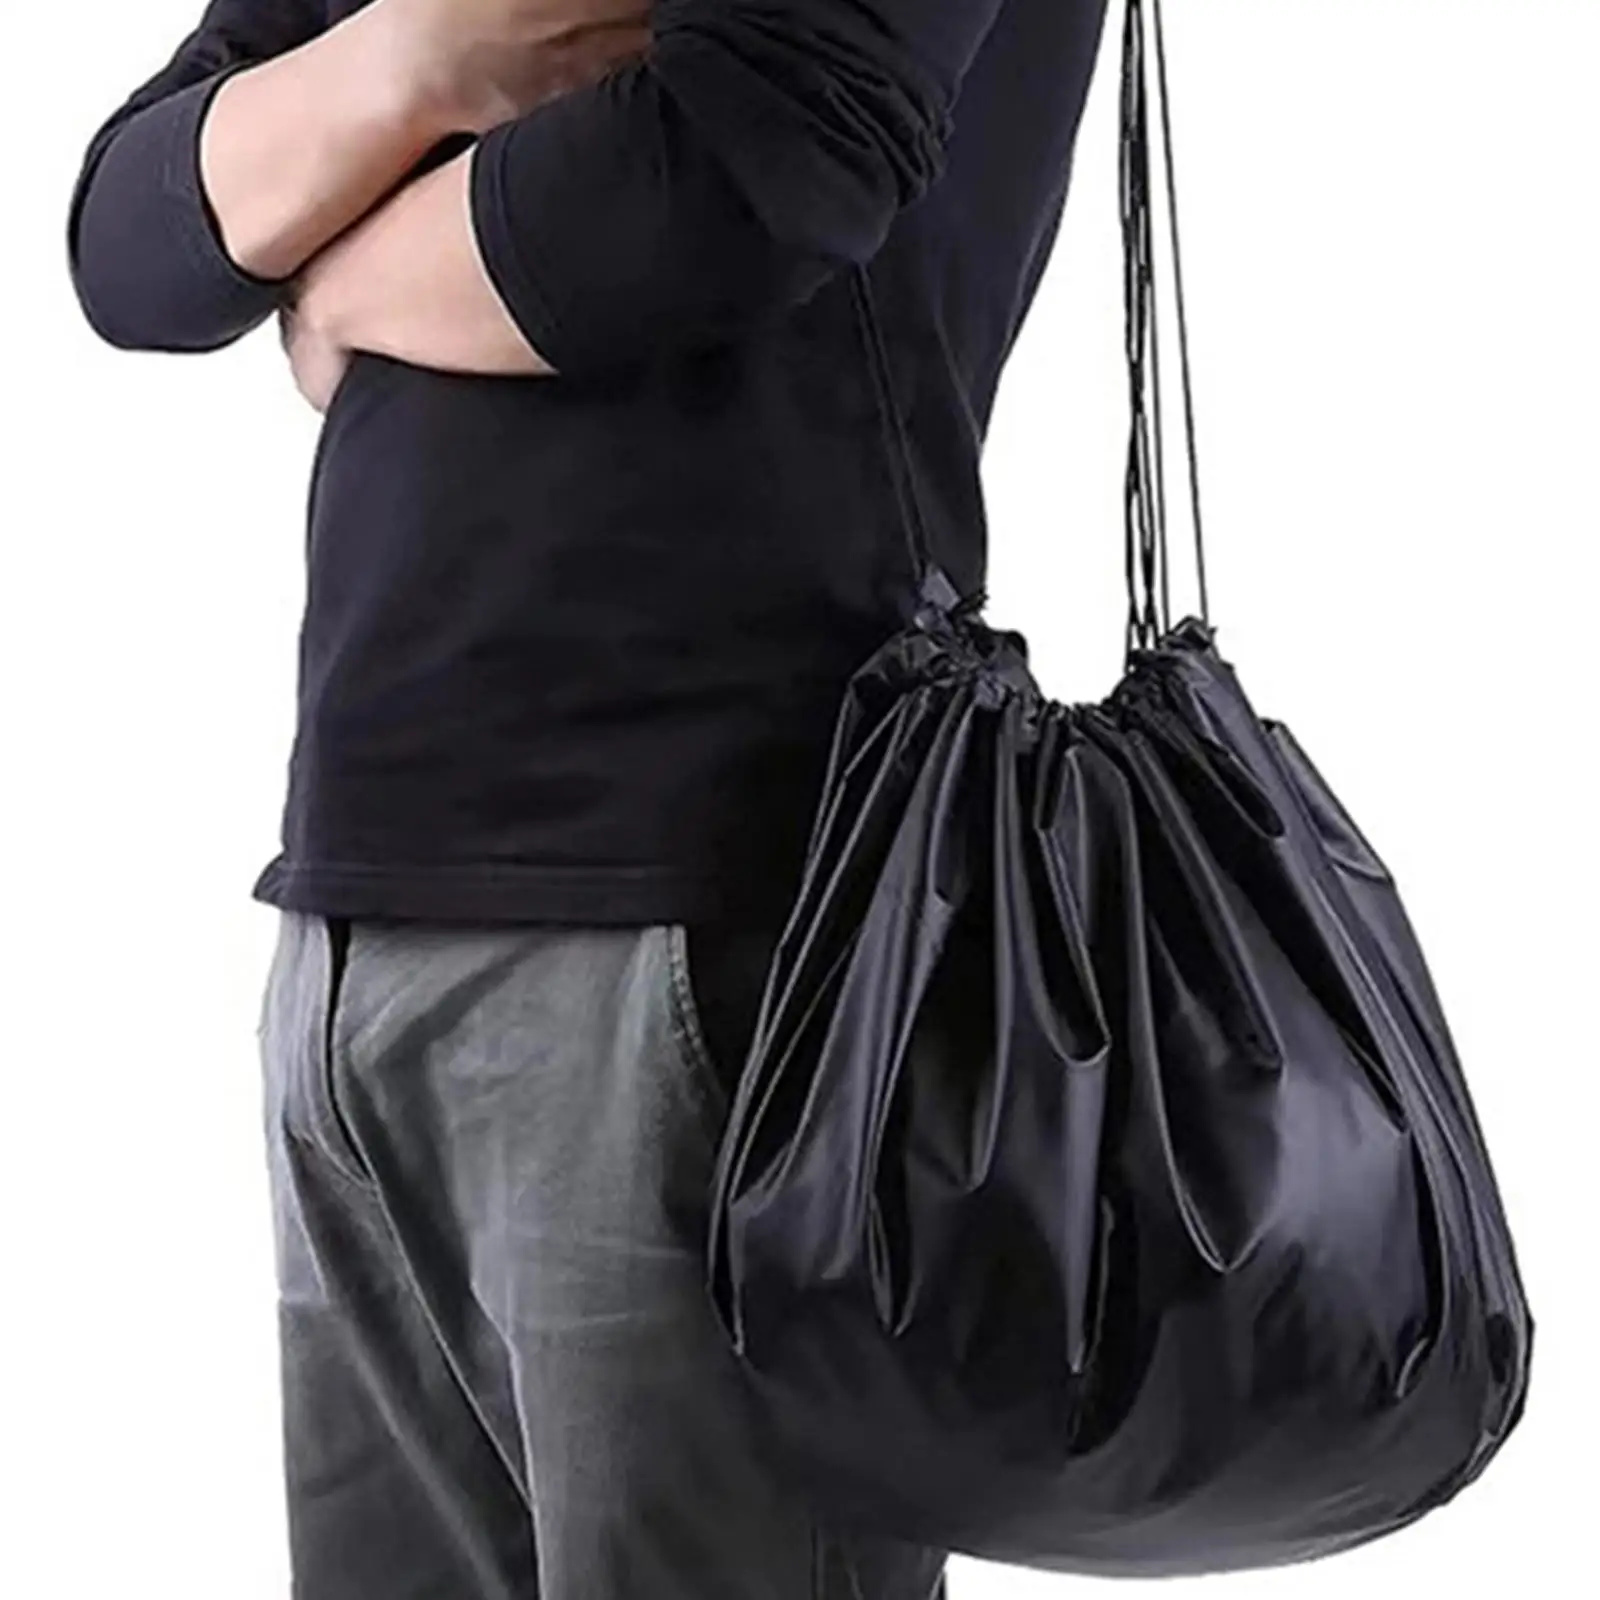 90cm Wetsuit Changing Mat Diving Suit Change Bag Mat Protective Portable Carry